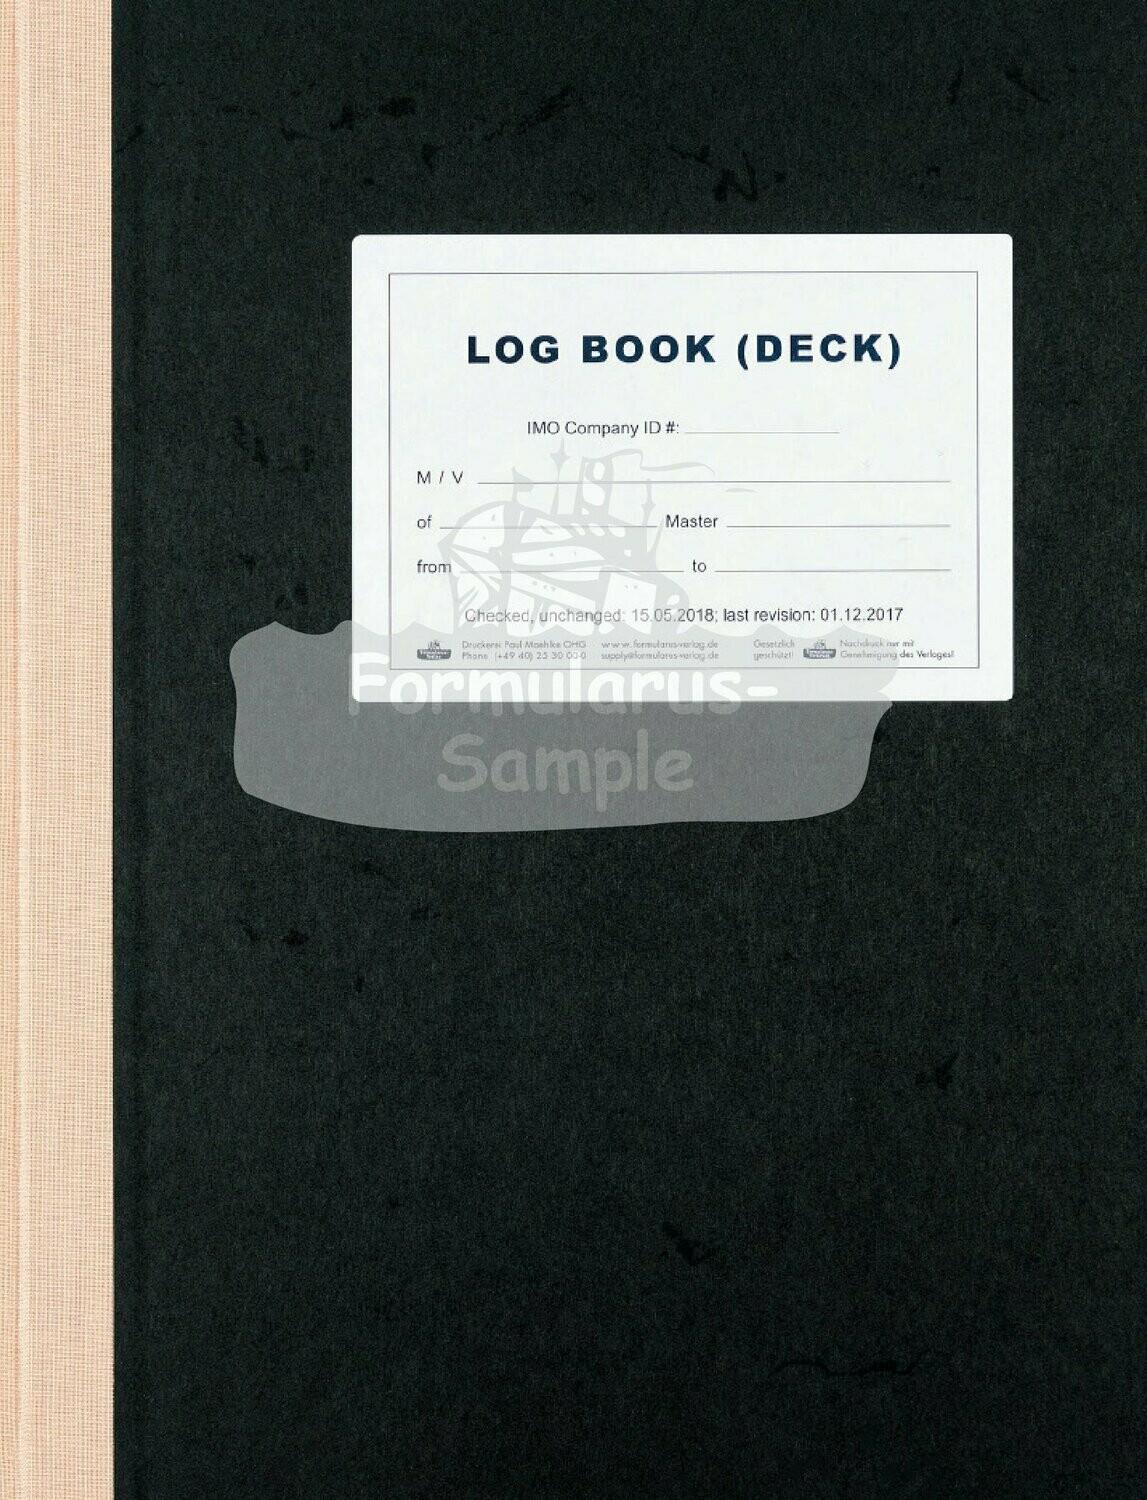 Deck Log Book